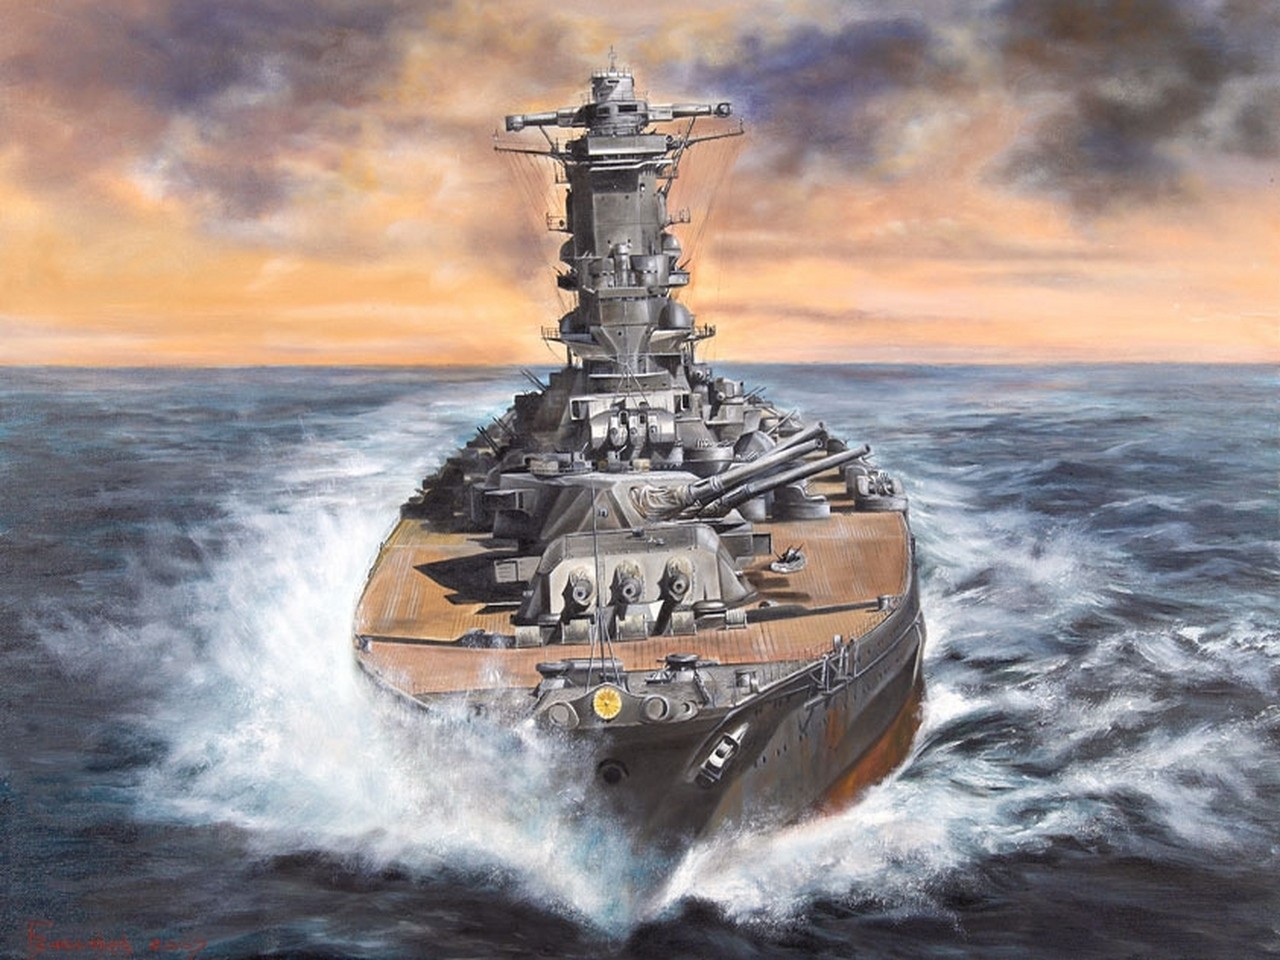 General 1280x960 artwork ship warship Battleships military vehicle military vehicle yamato (ship) water clouds